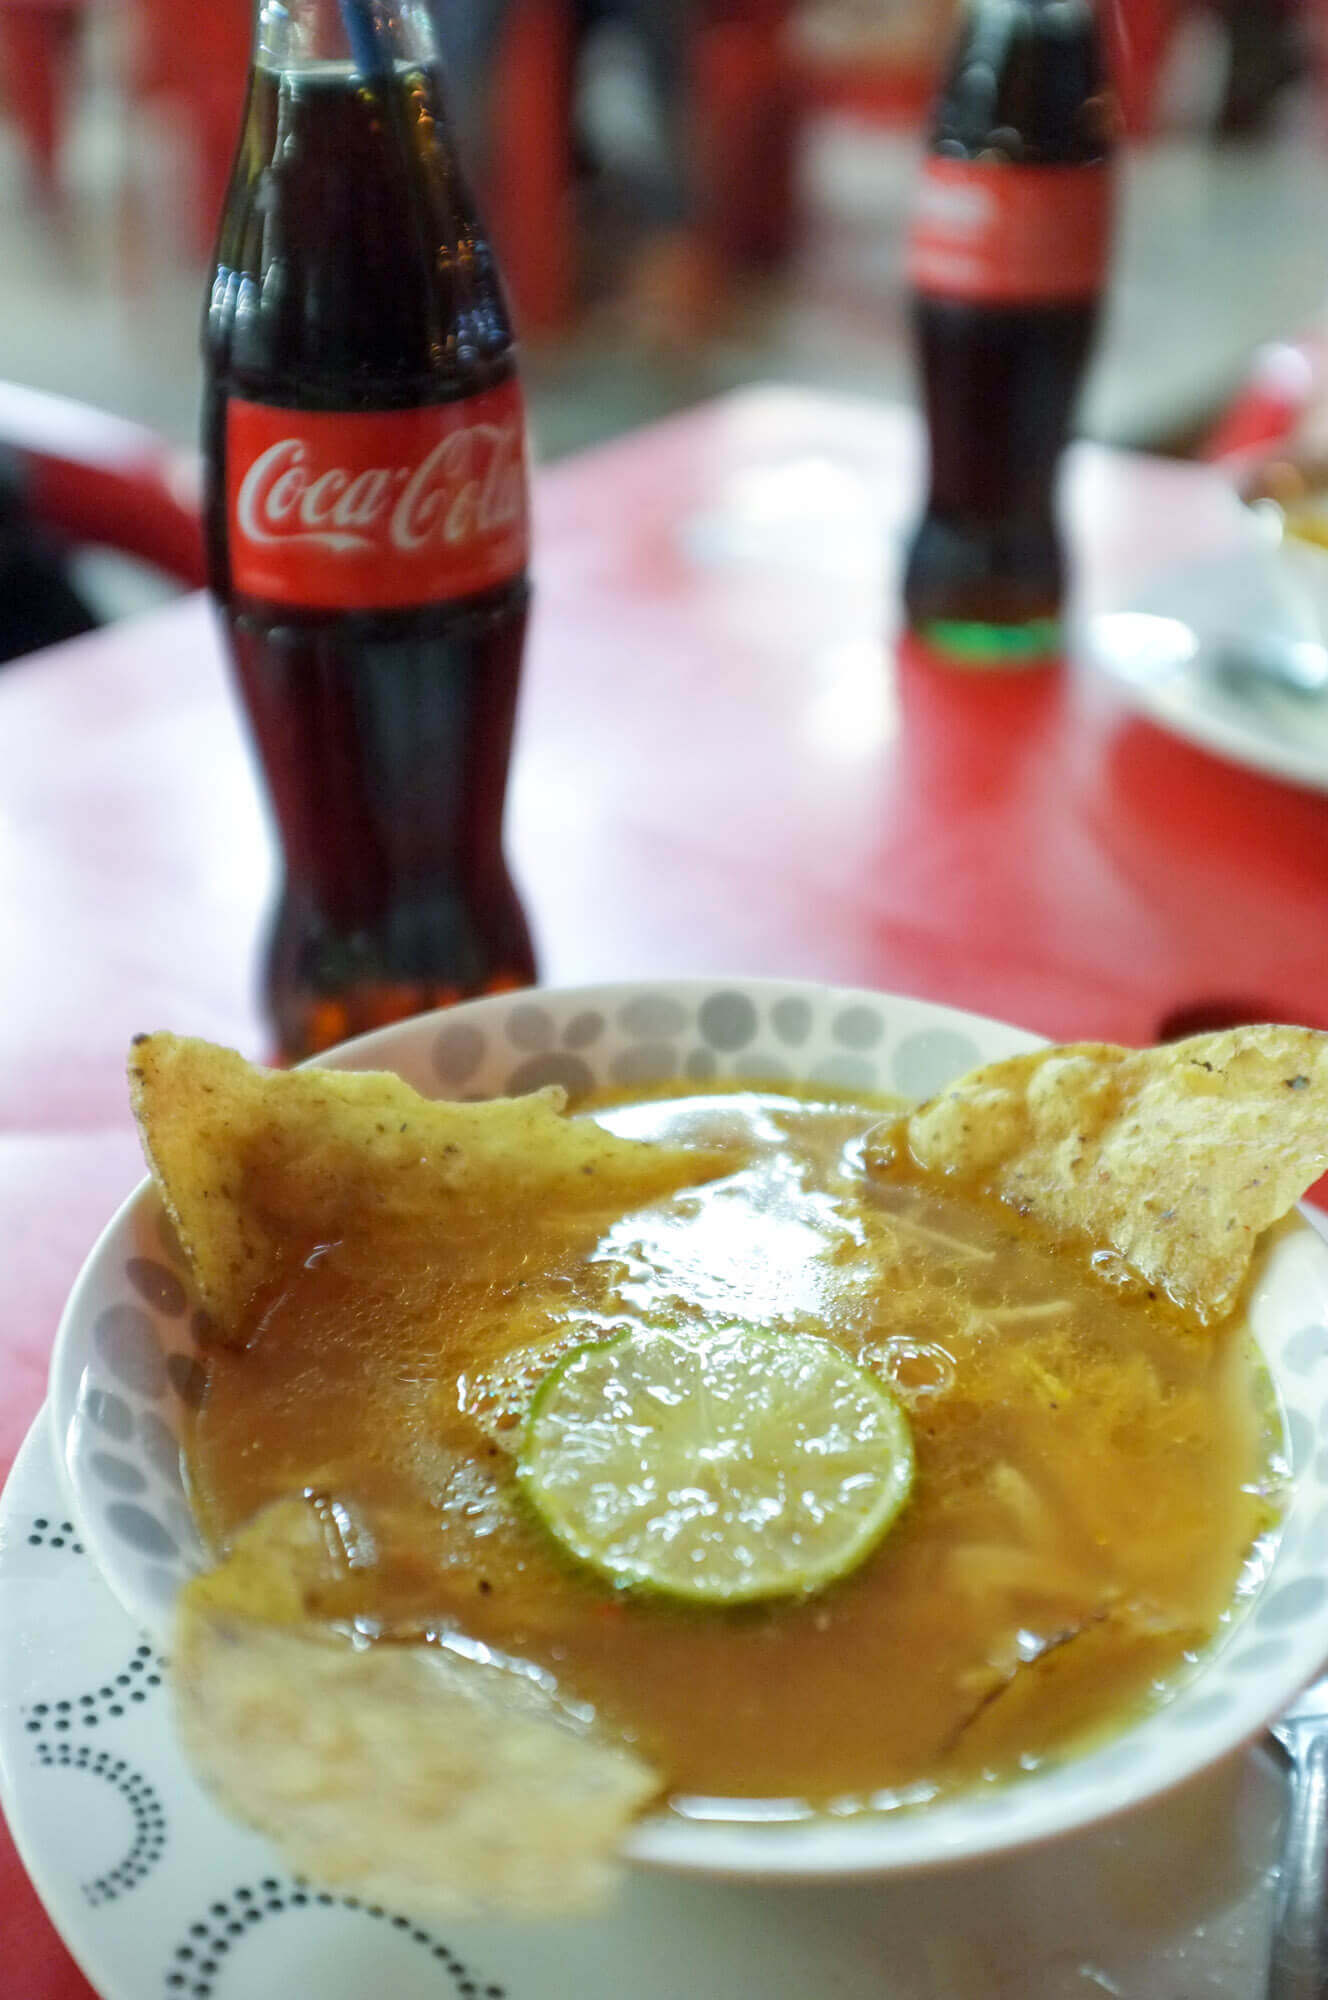 The classic Yucatecan soup, sopa de lima, at Santa Ana food market in Mérida, Mexico